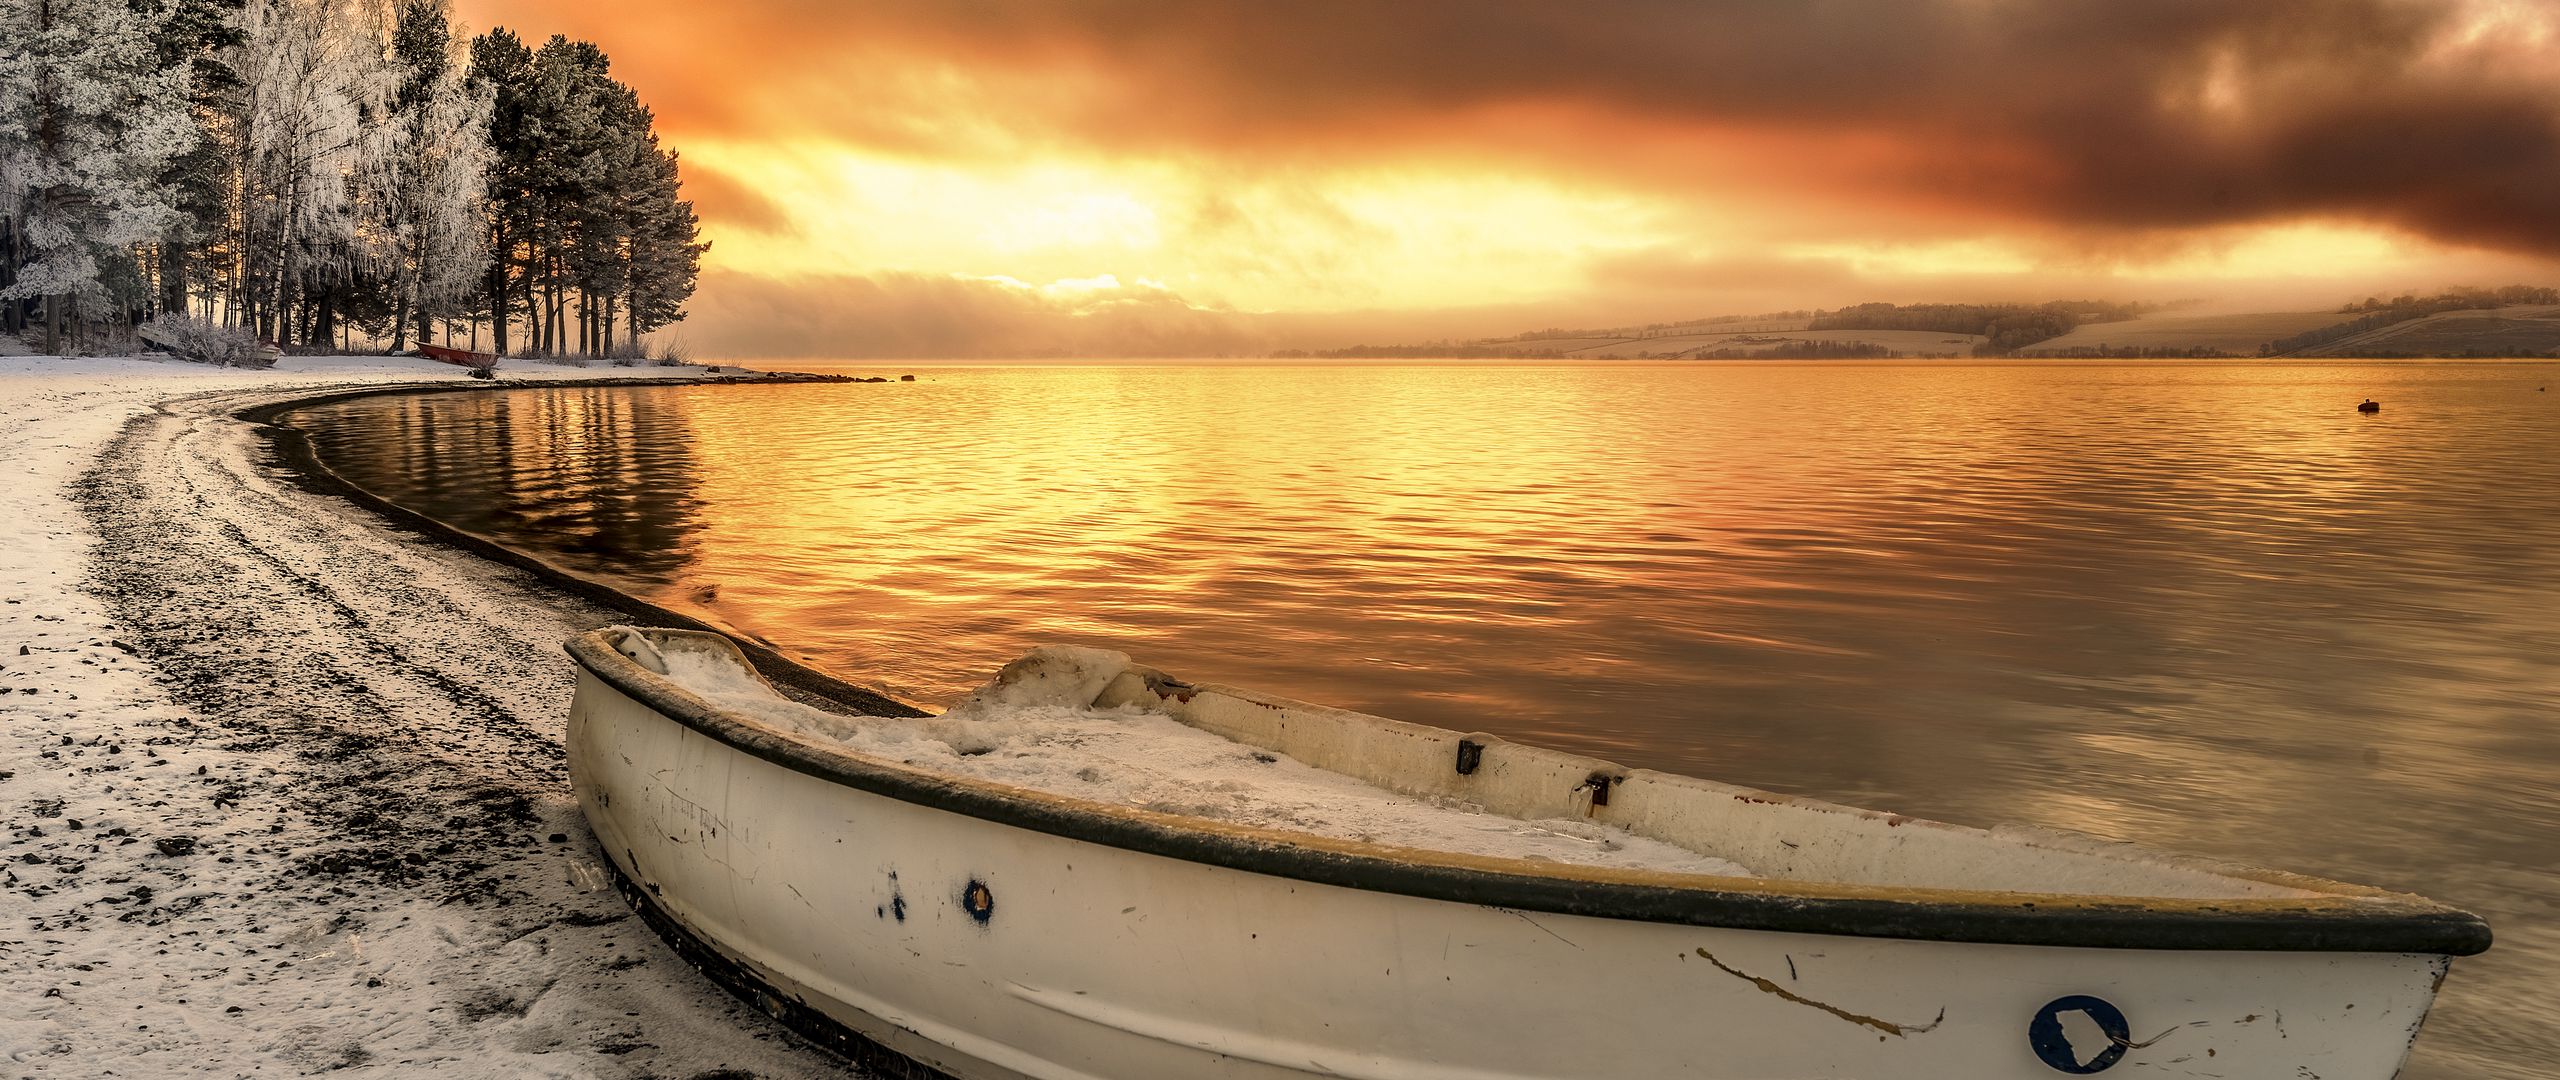 Download wallpaper 2560x1080 lake, boat, shore, sunset, snow, landscape  dual wide 1080p hd background